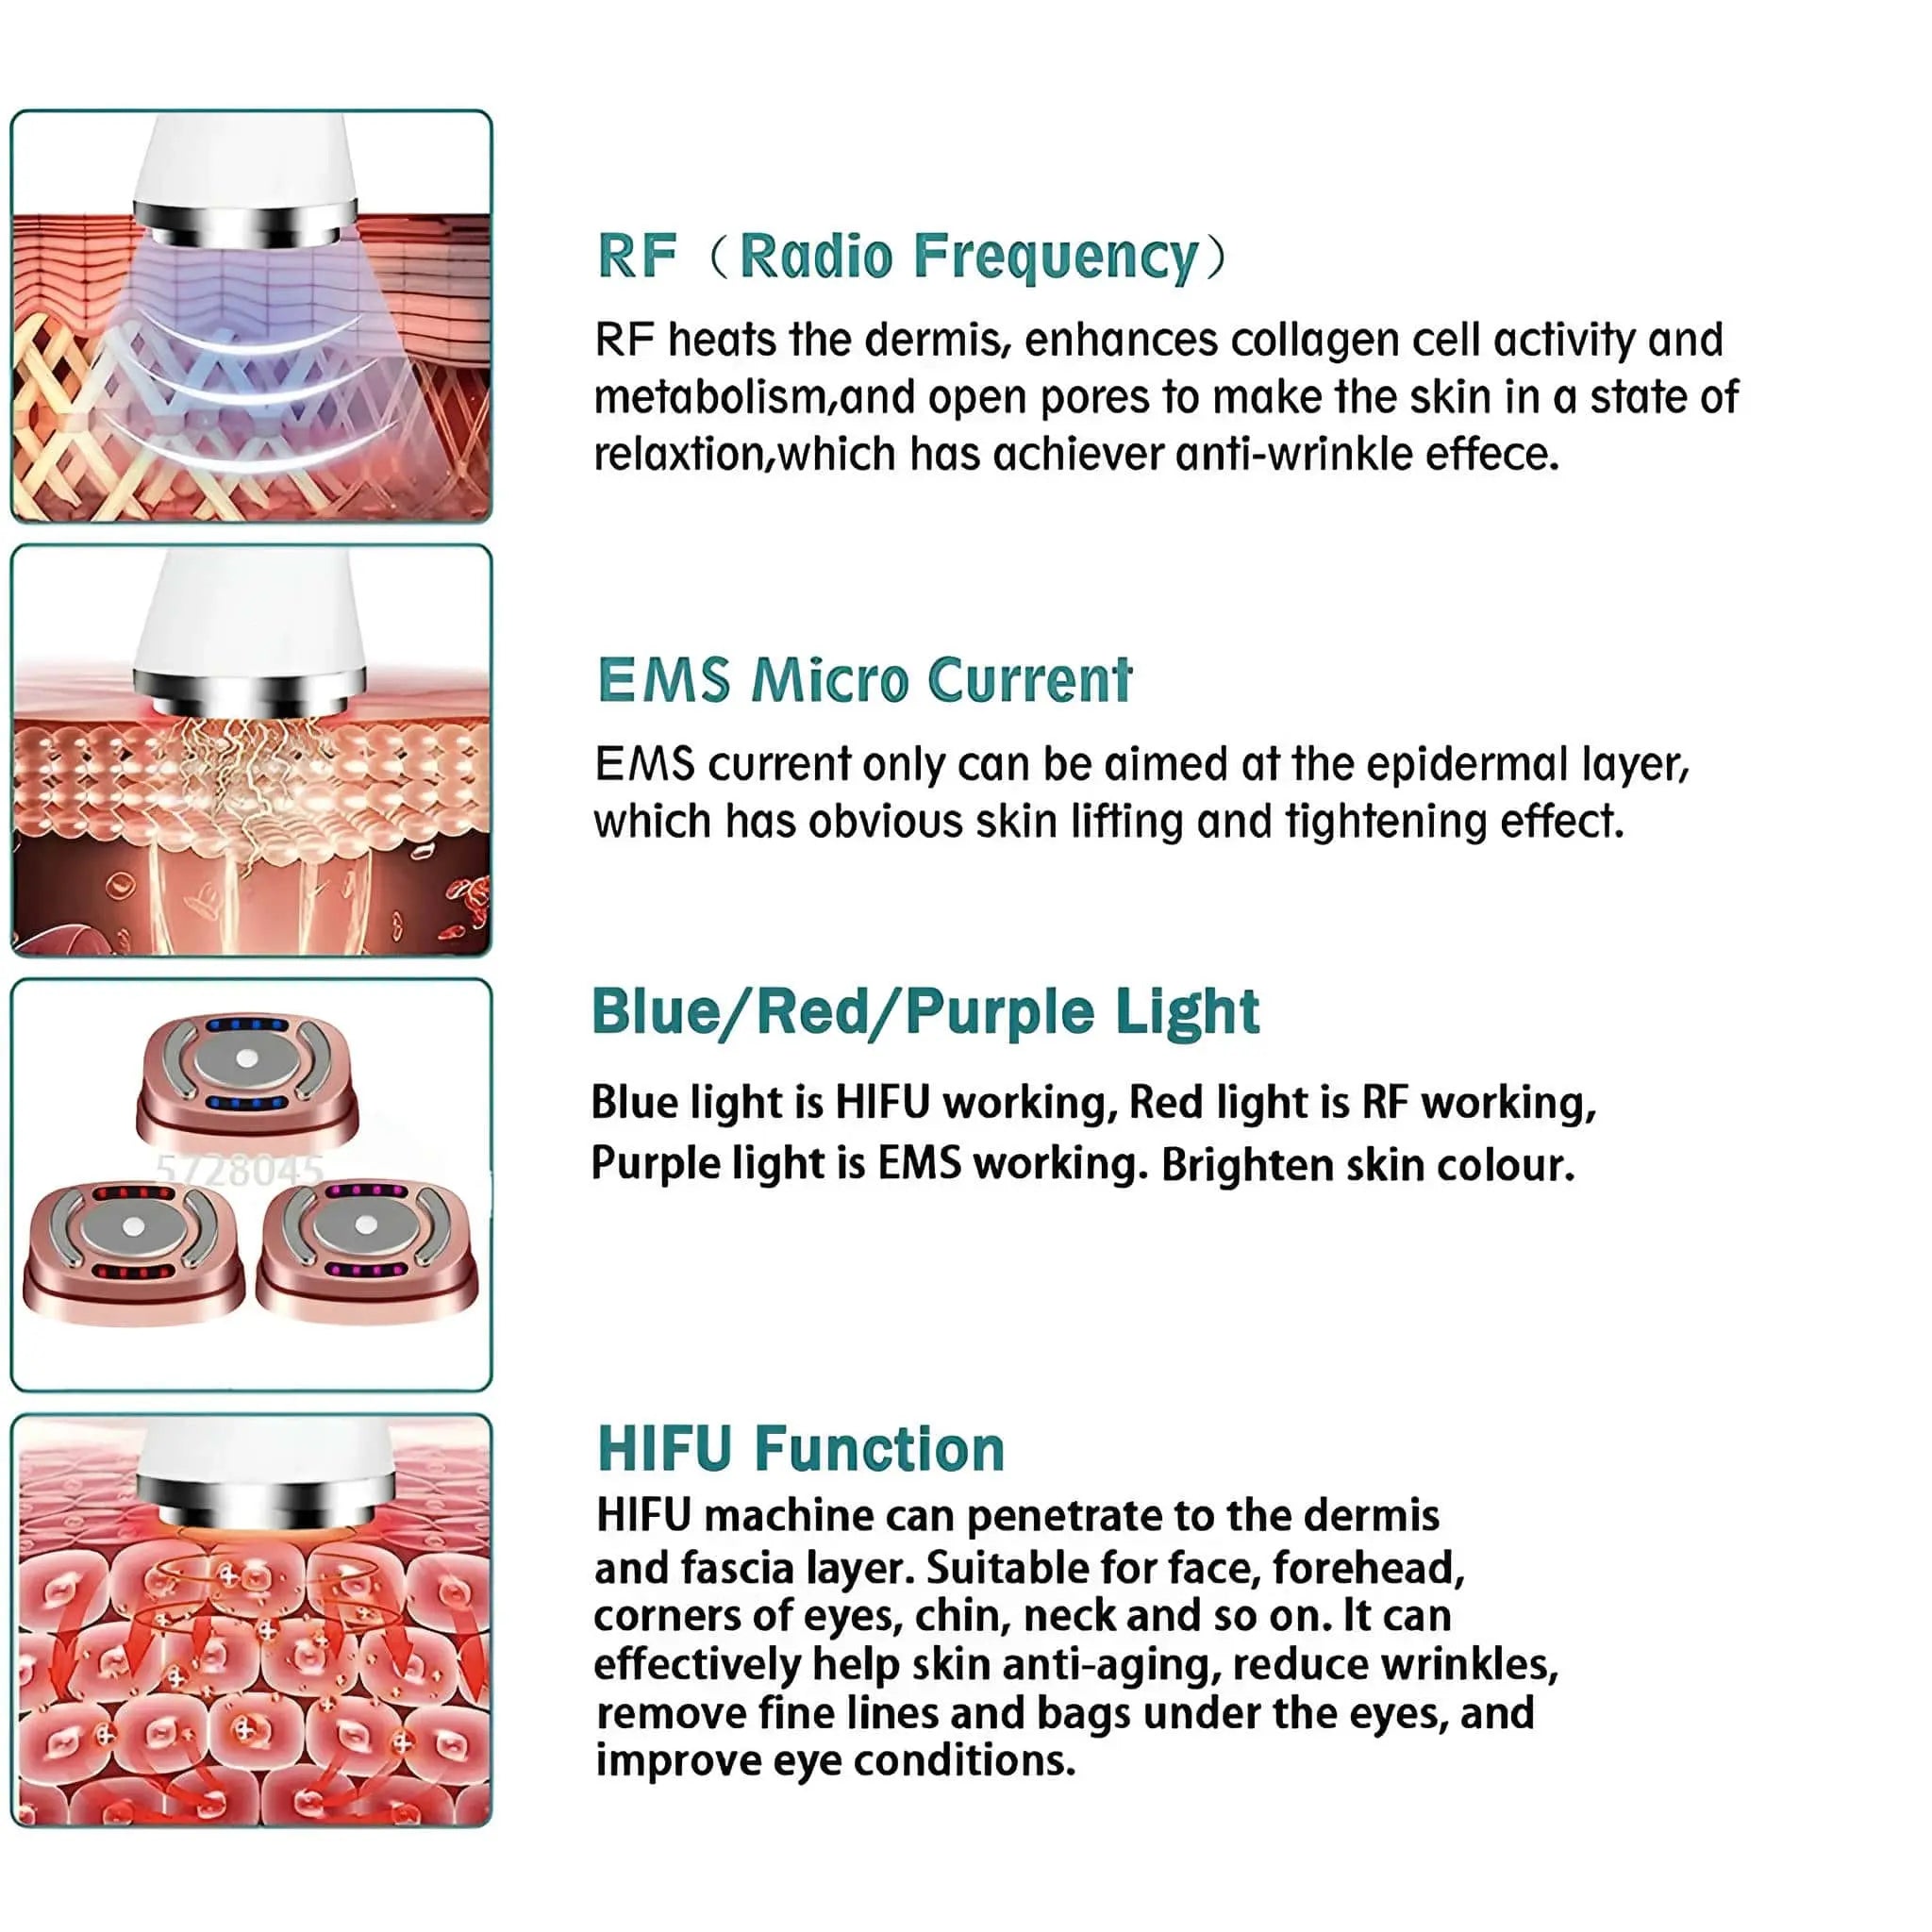 HiFU RF Ultrasonic Facial Machine For Skin Tightening